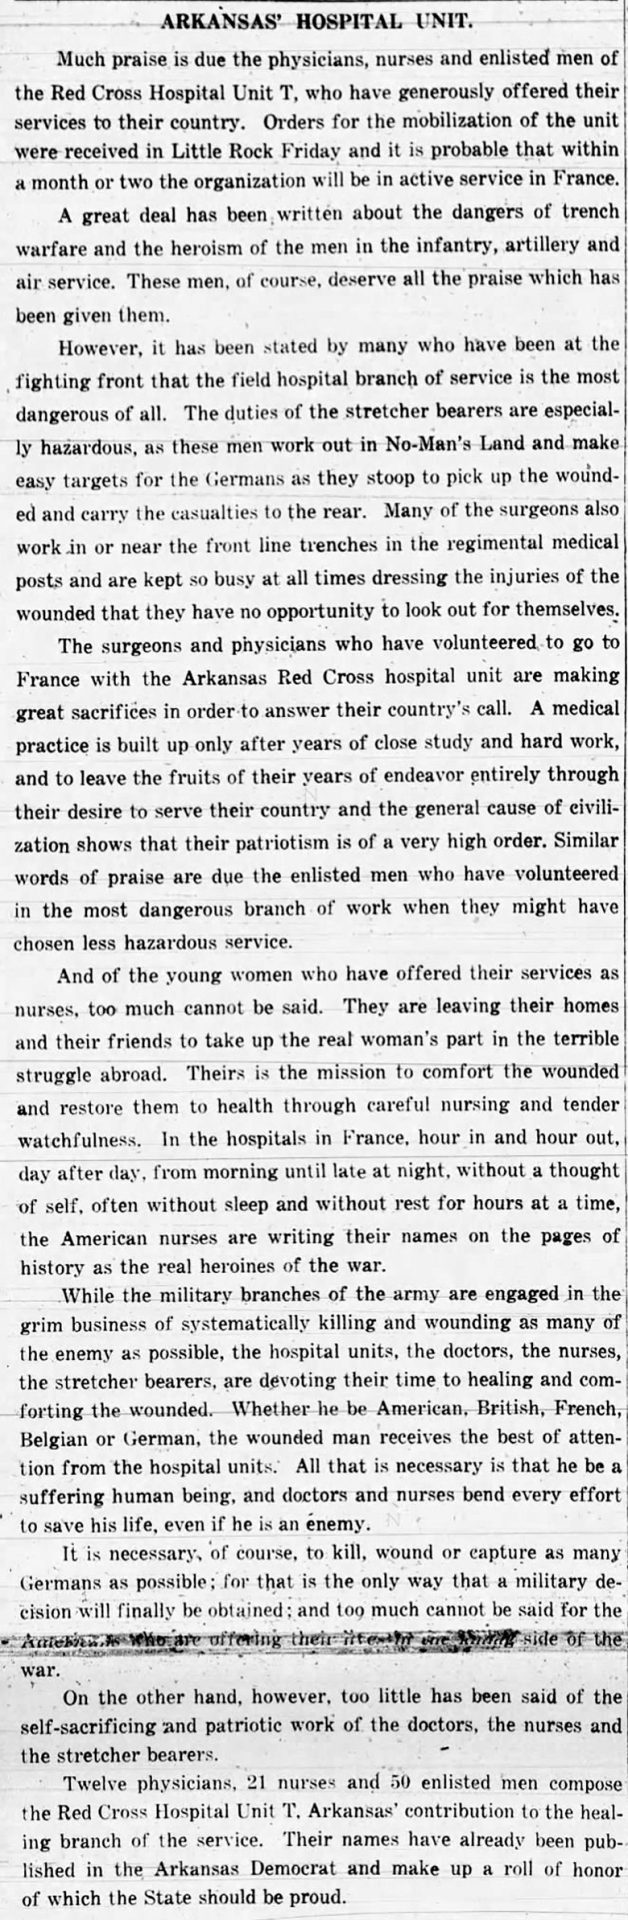 "Arkansas' hospital unit" newspaper clipping